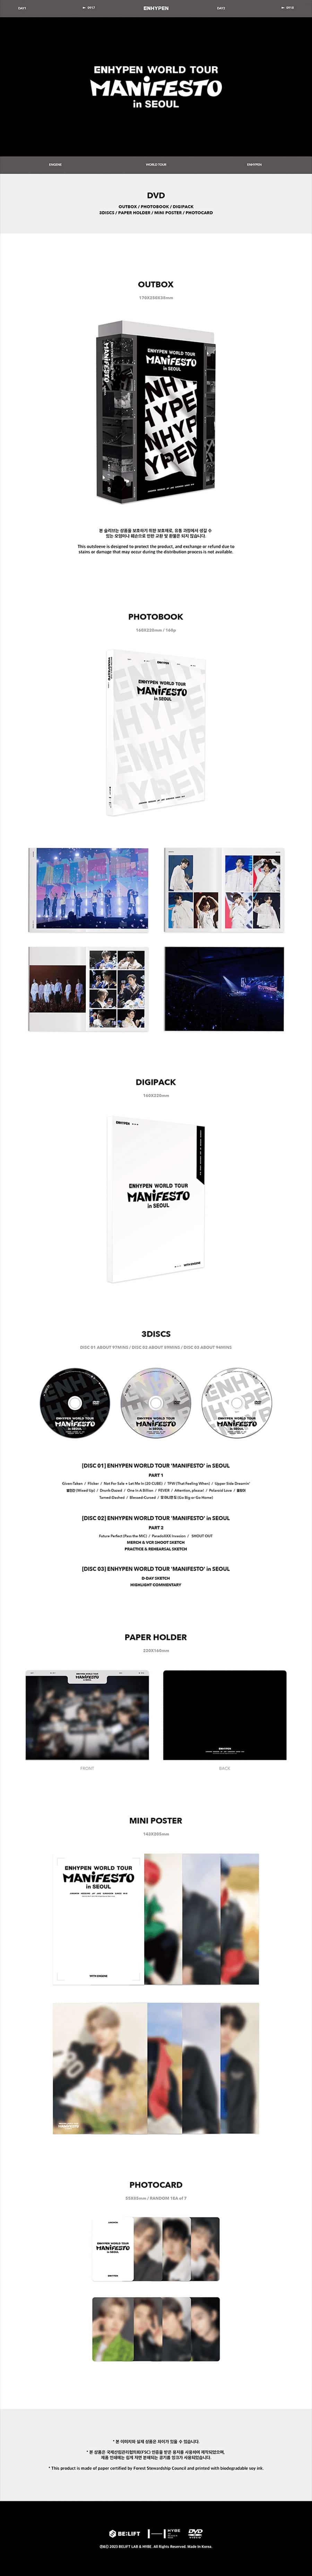 enhypen-manifesto-in-seoul-dvd-wholesale